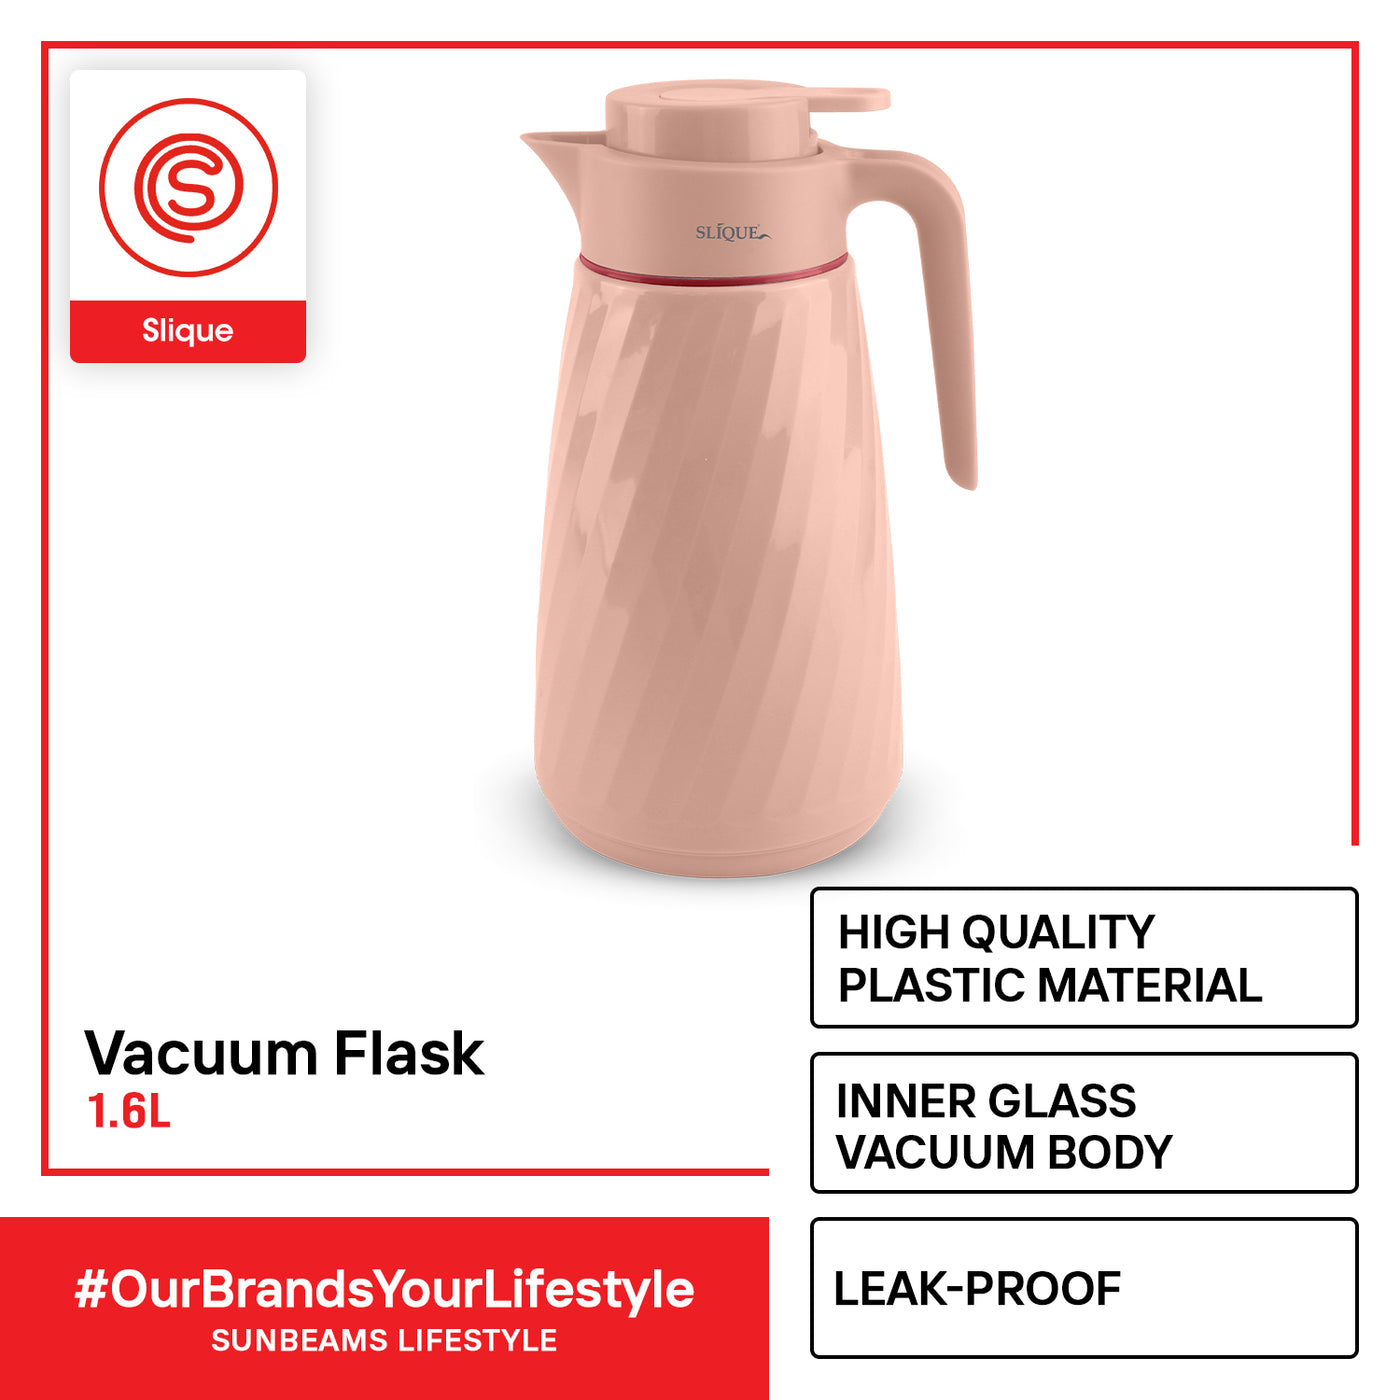 SLIQUE Premium Vacuum Flask 1600ml Modern Italian Design Amazing Gift Idea For Any Occasion! (Coral)